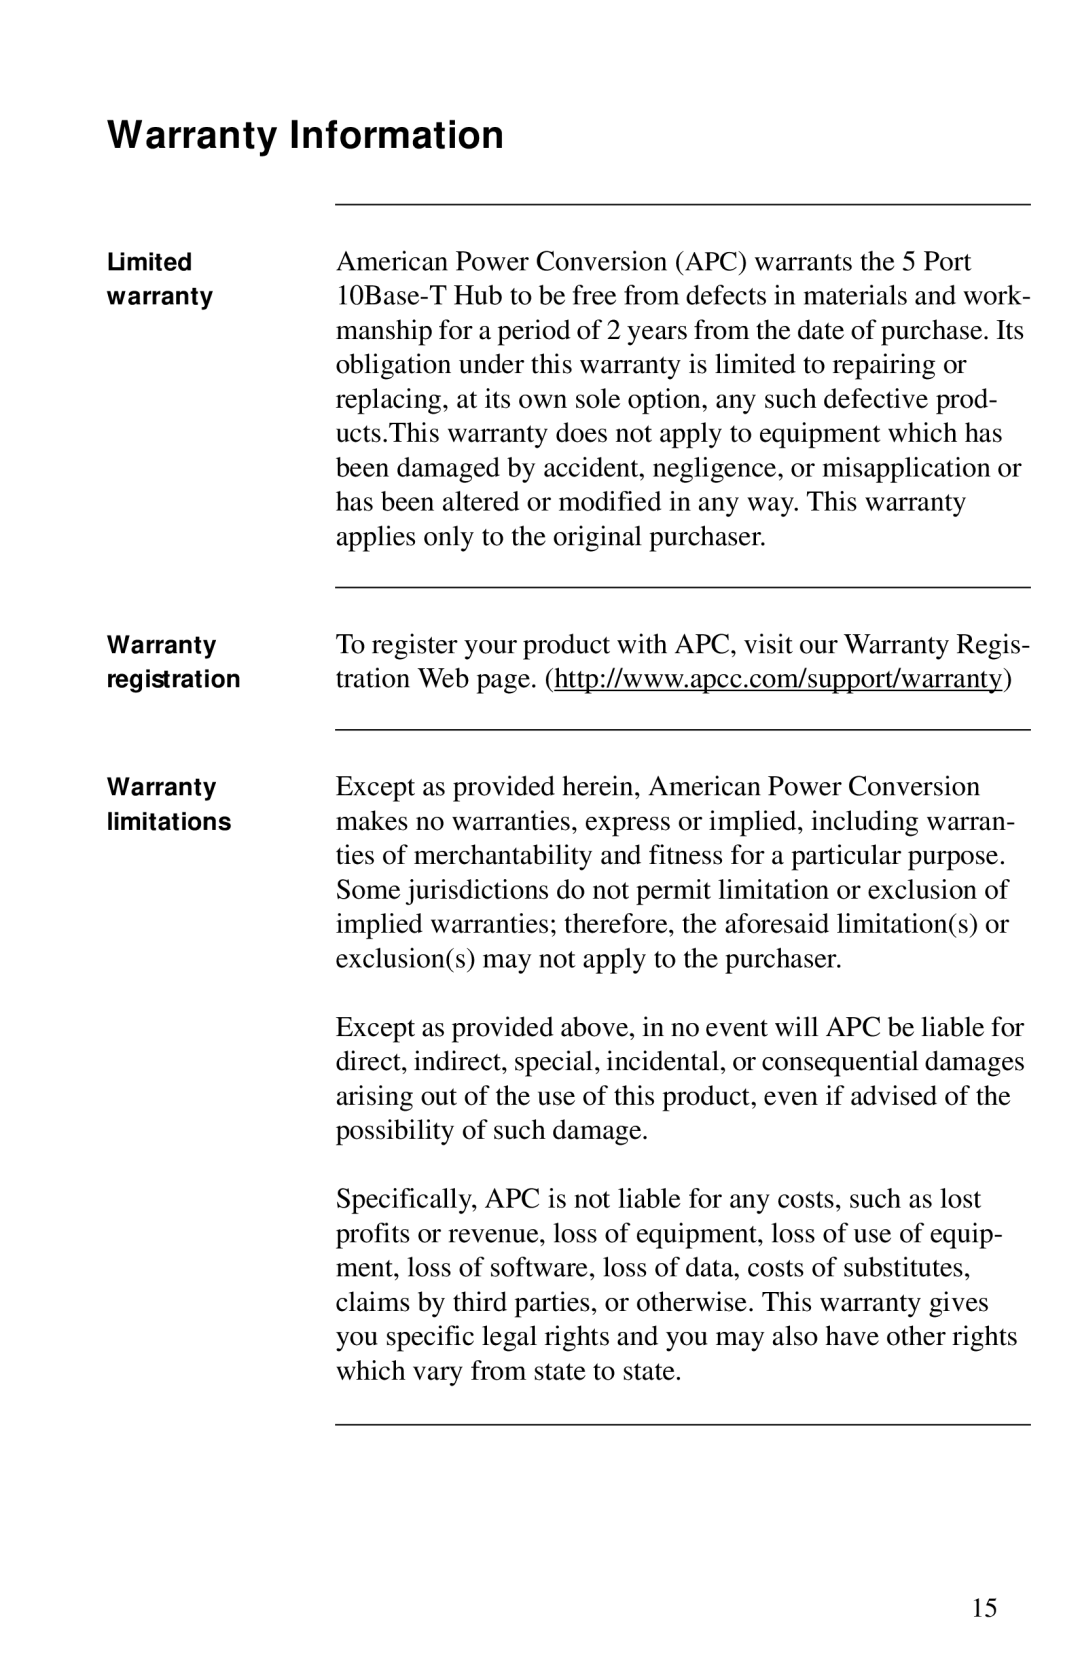 American Power Conversion AP9615 manual Warranty Information 